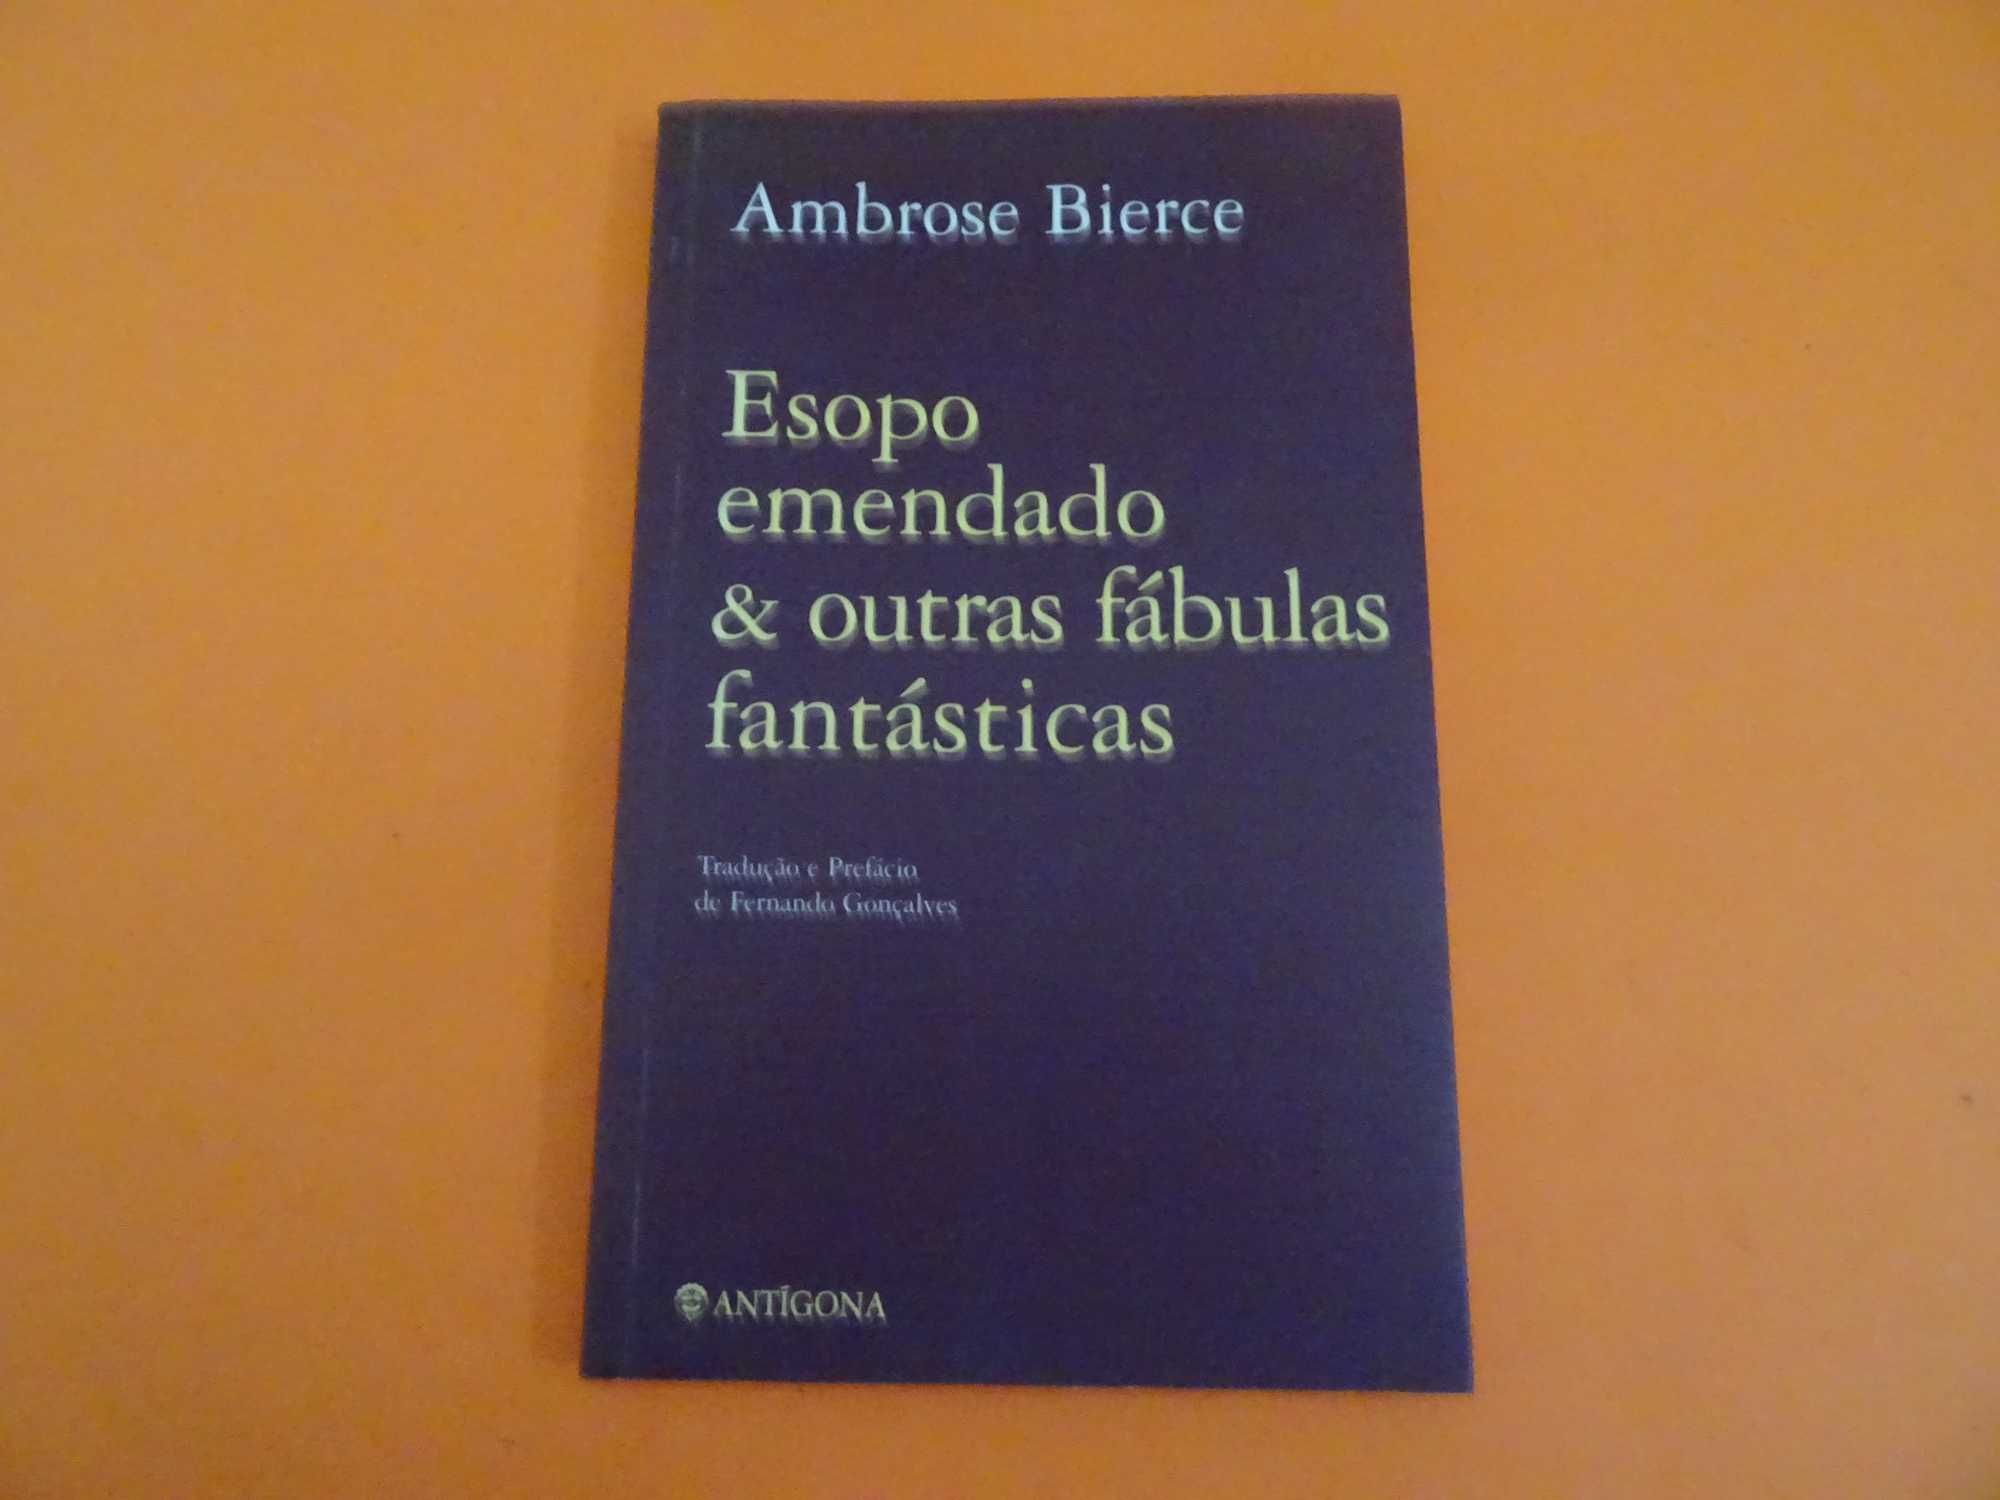 Esopo emendado & outras fábulas fantásticas - Ambrose Bierce